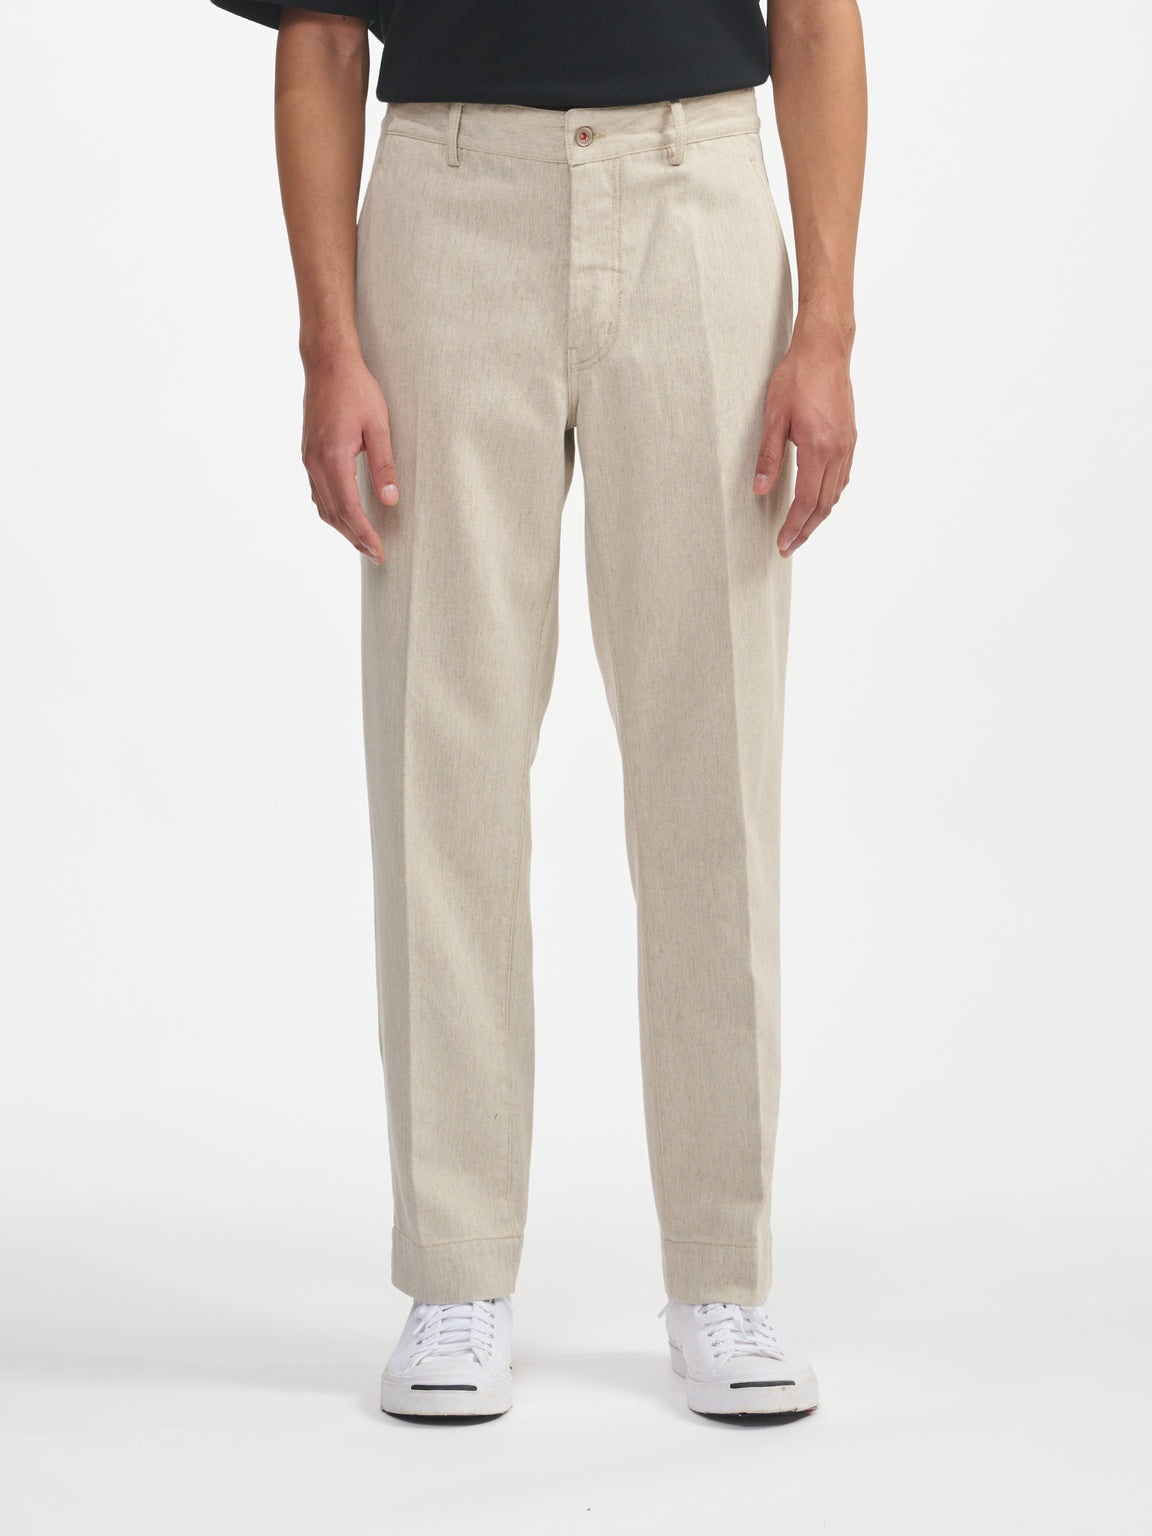 Pantalons Pen - Blanc | Collection Hommes | Bellerose